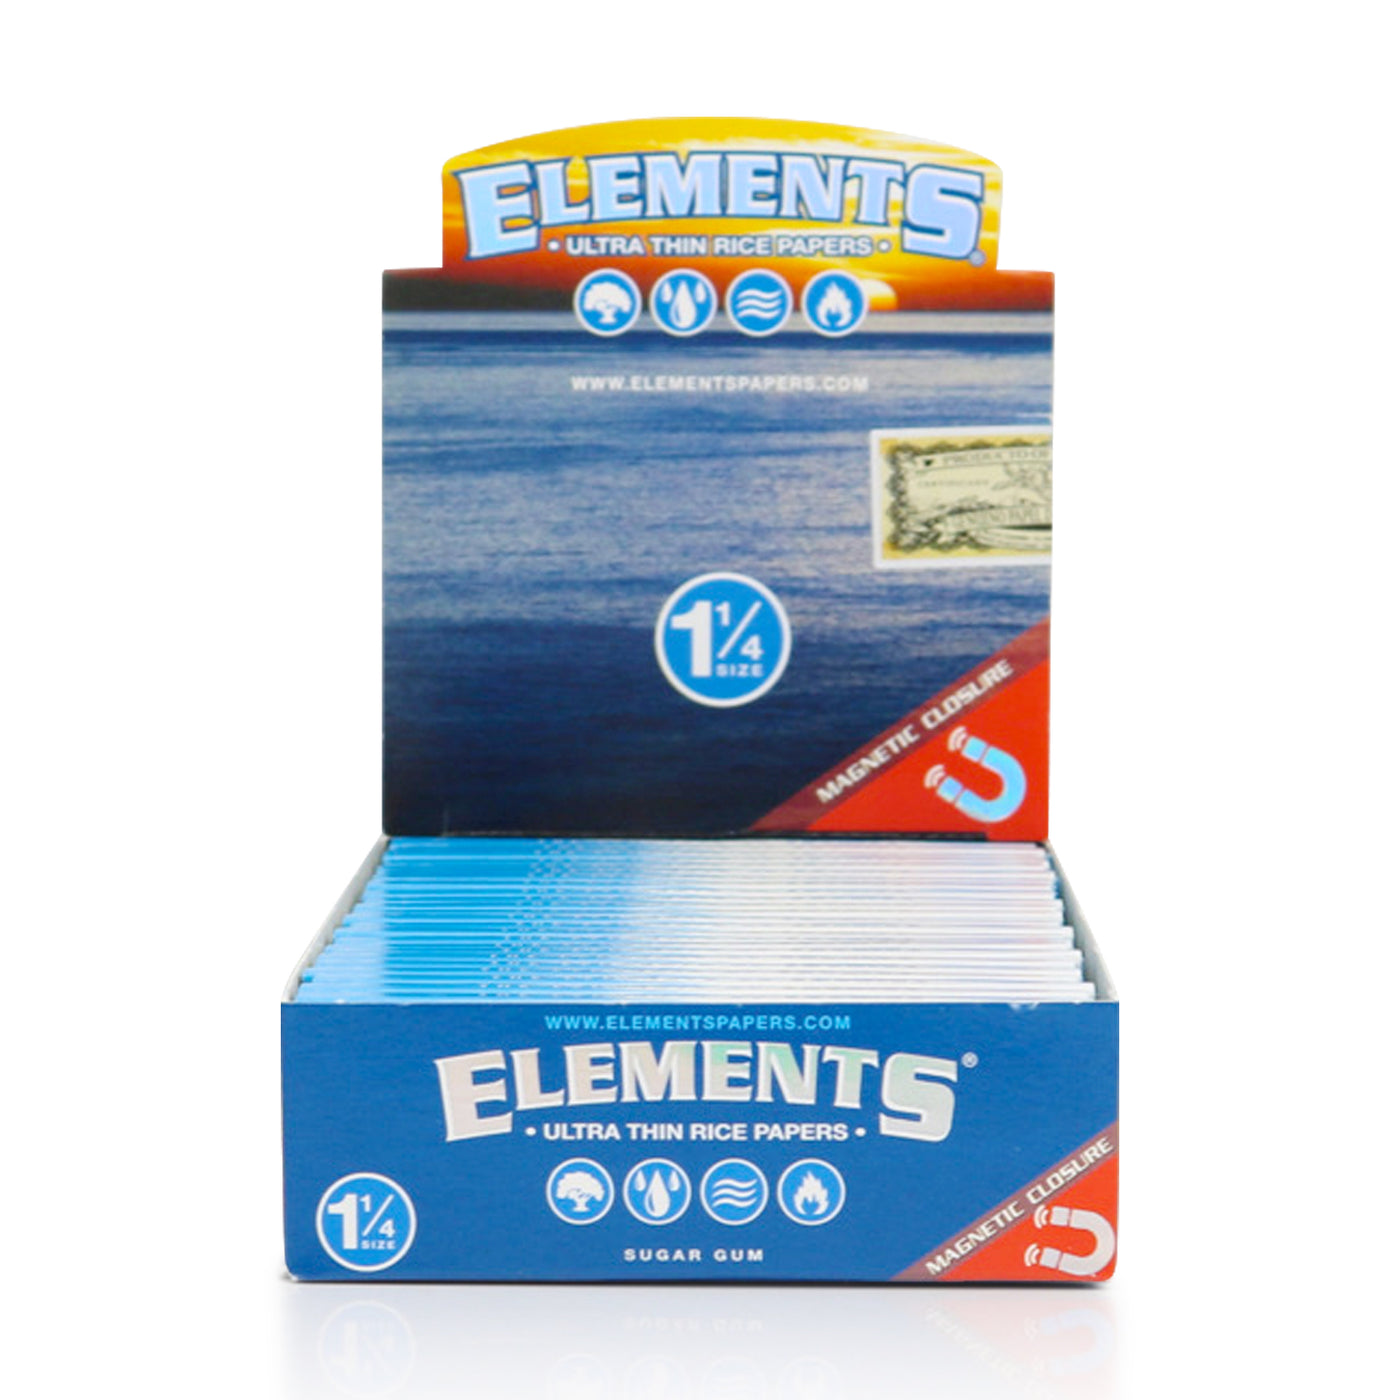 Elements 1 1/4 Paper